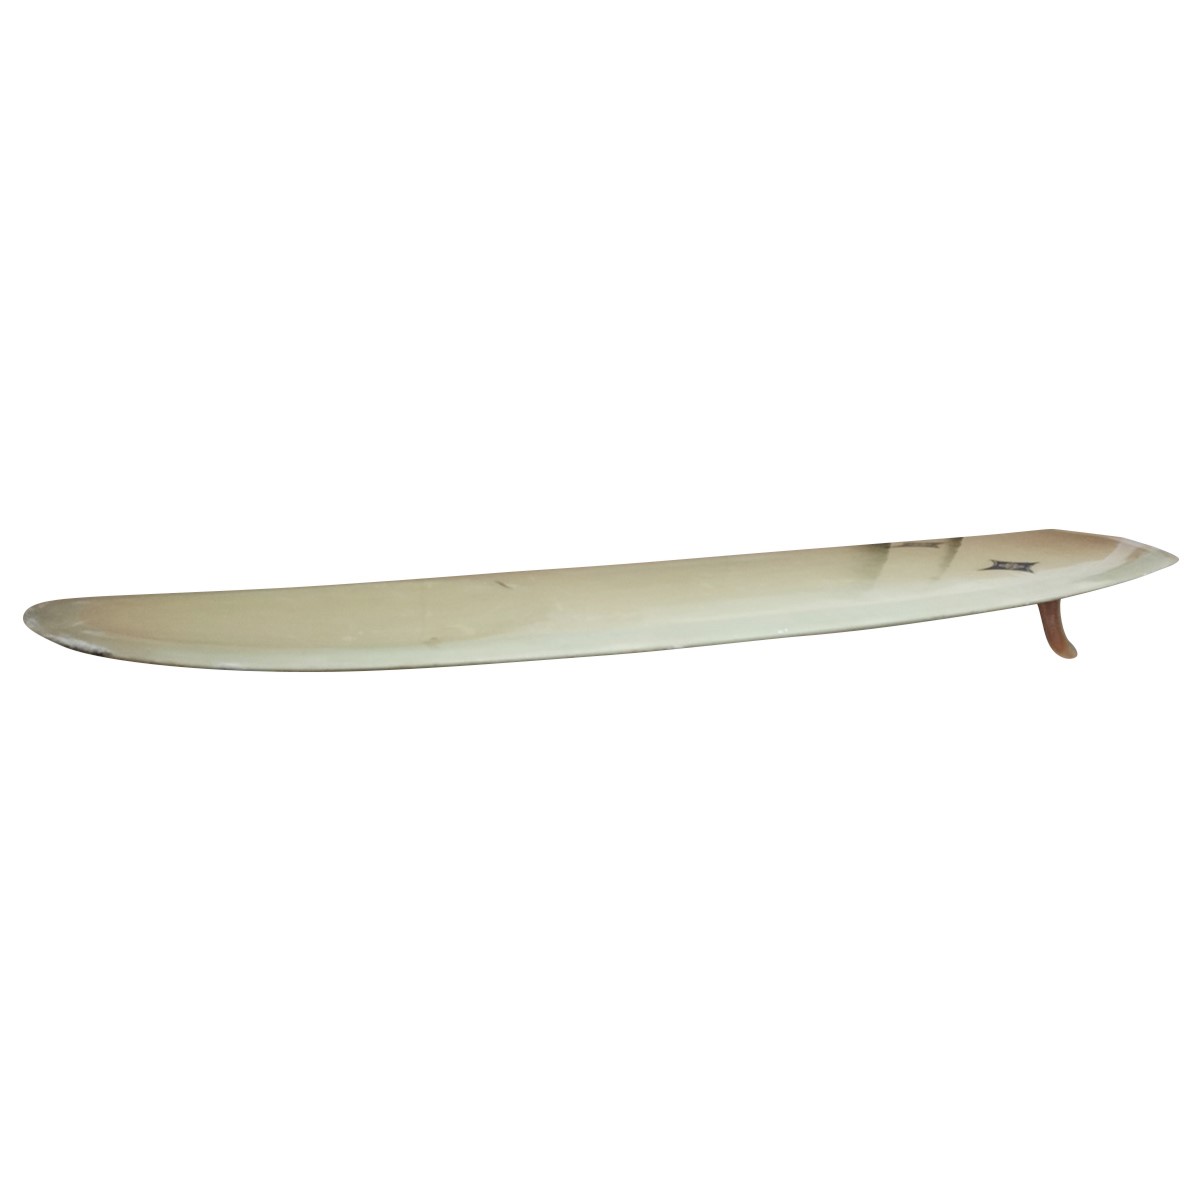 BENNETT SURFBOARDS / 60`S SINGLE FIN